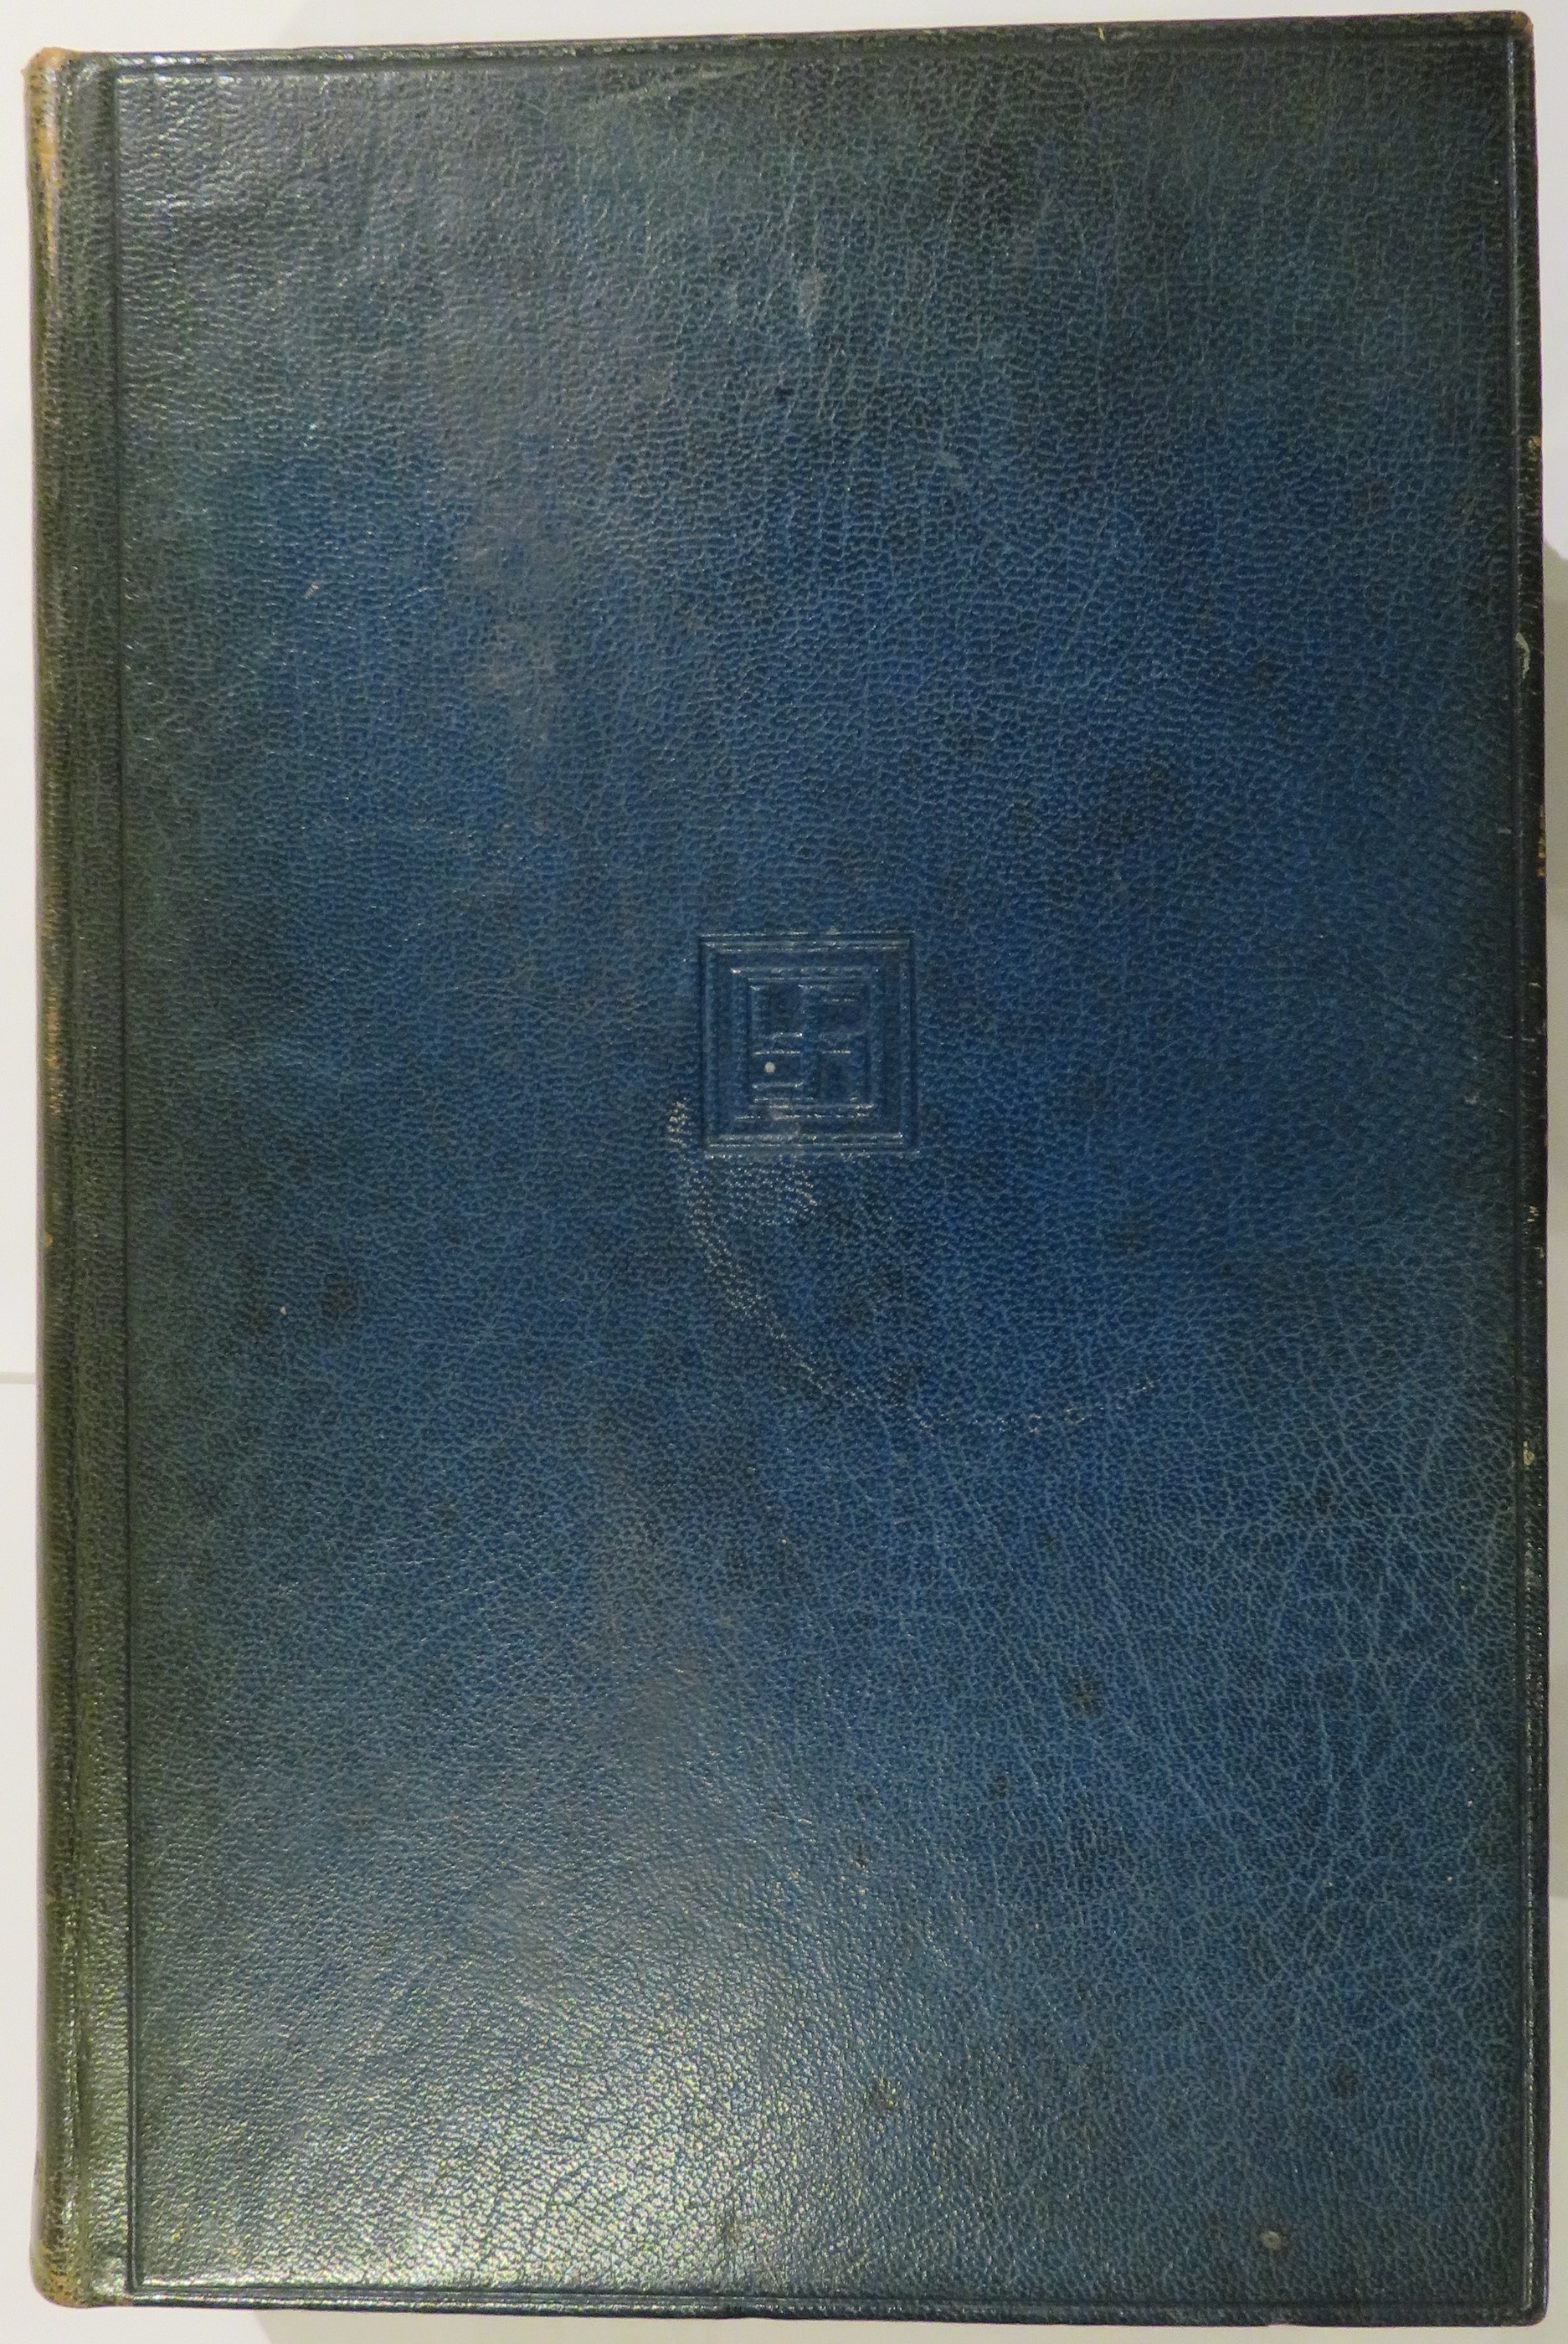 Rudyard Kipling's Verse Inclusive Edition 1885-1926